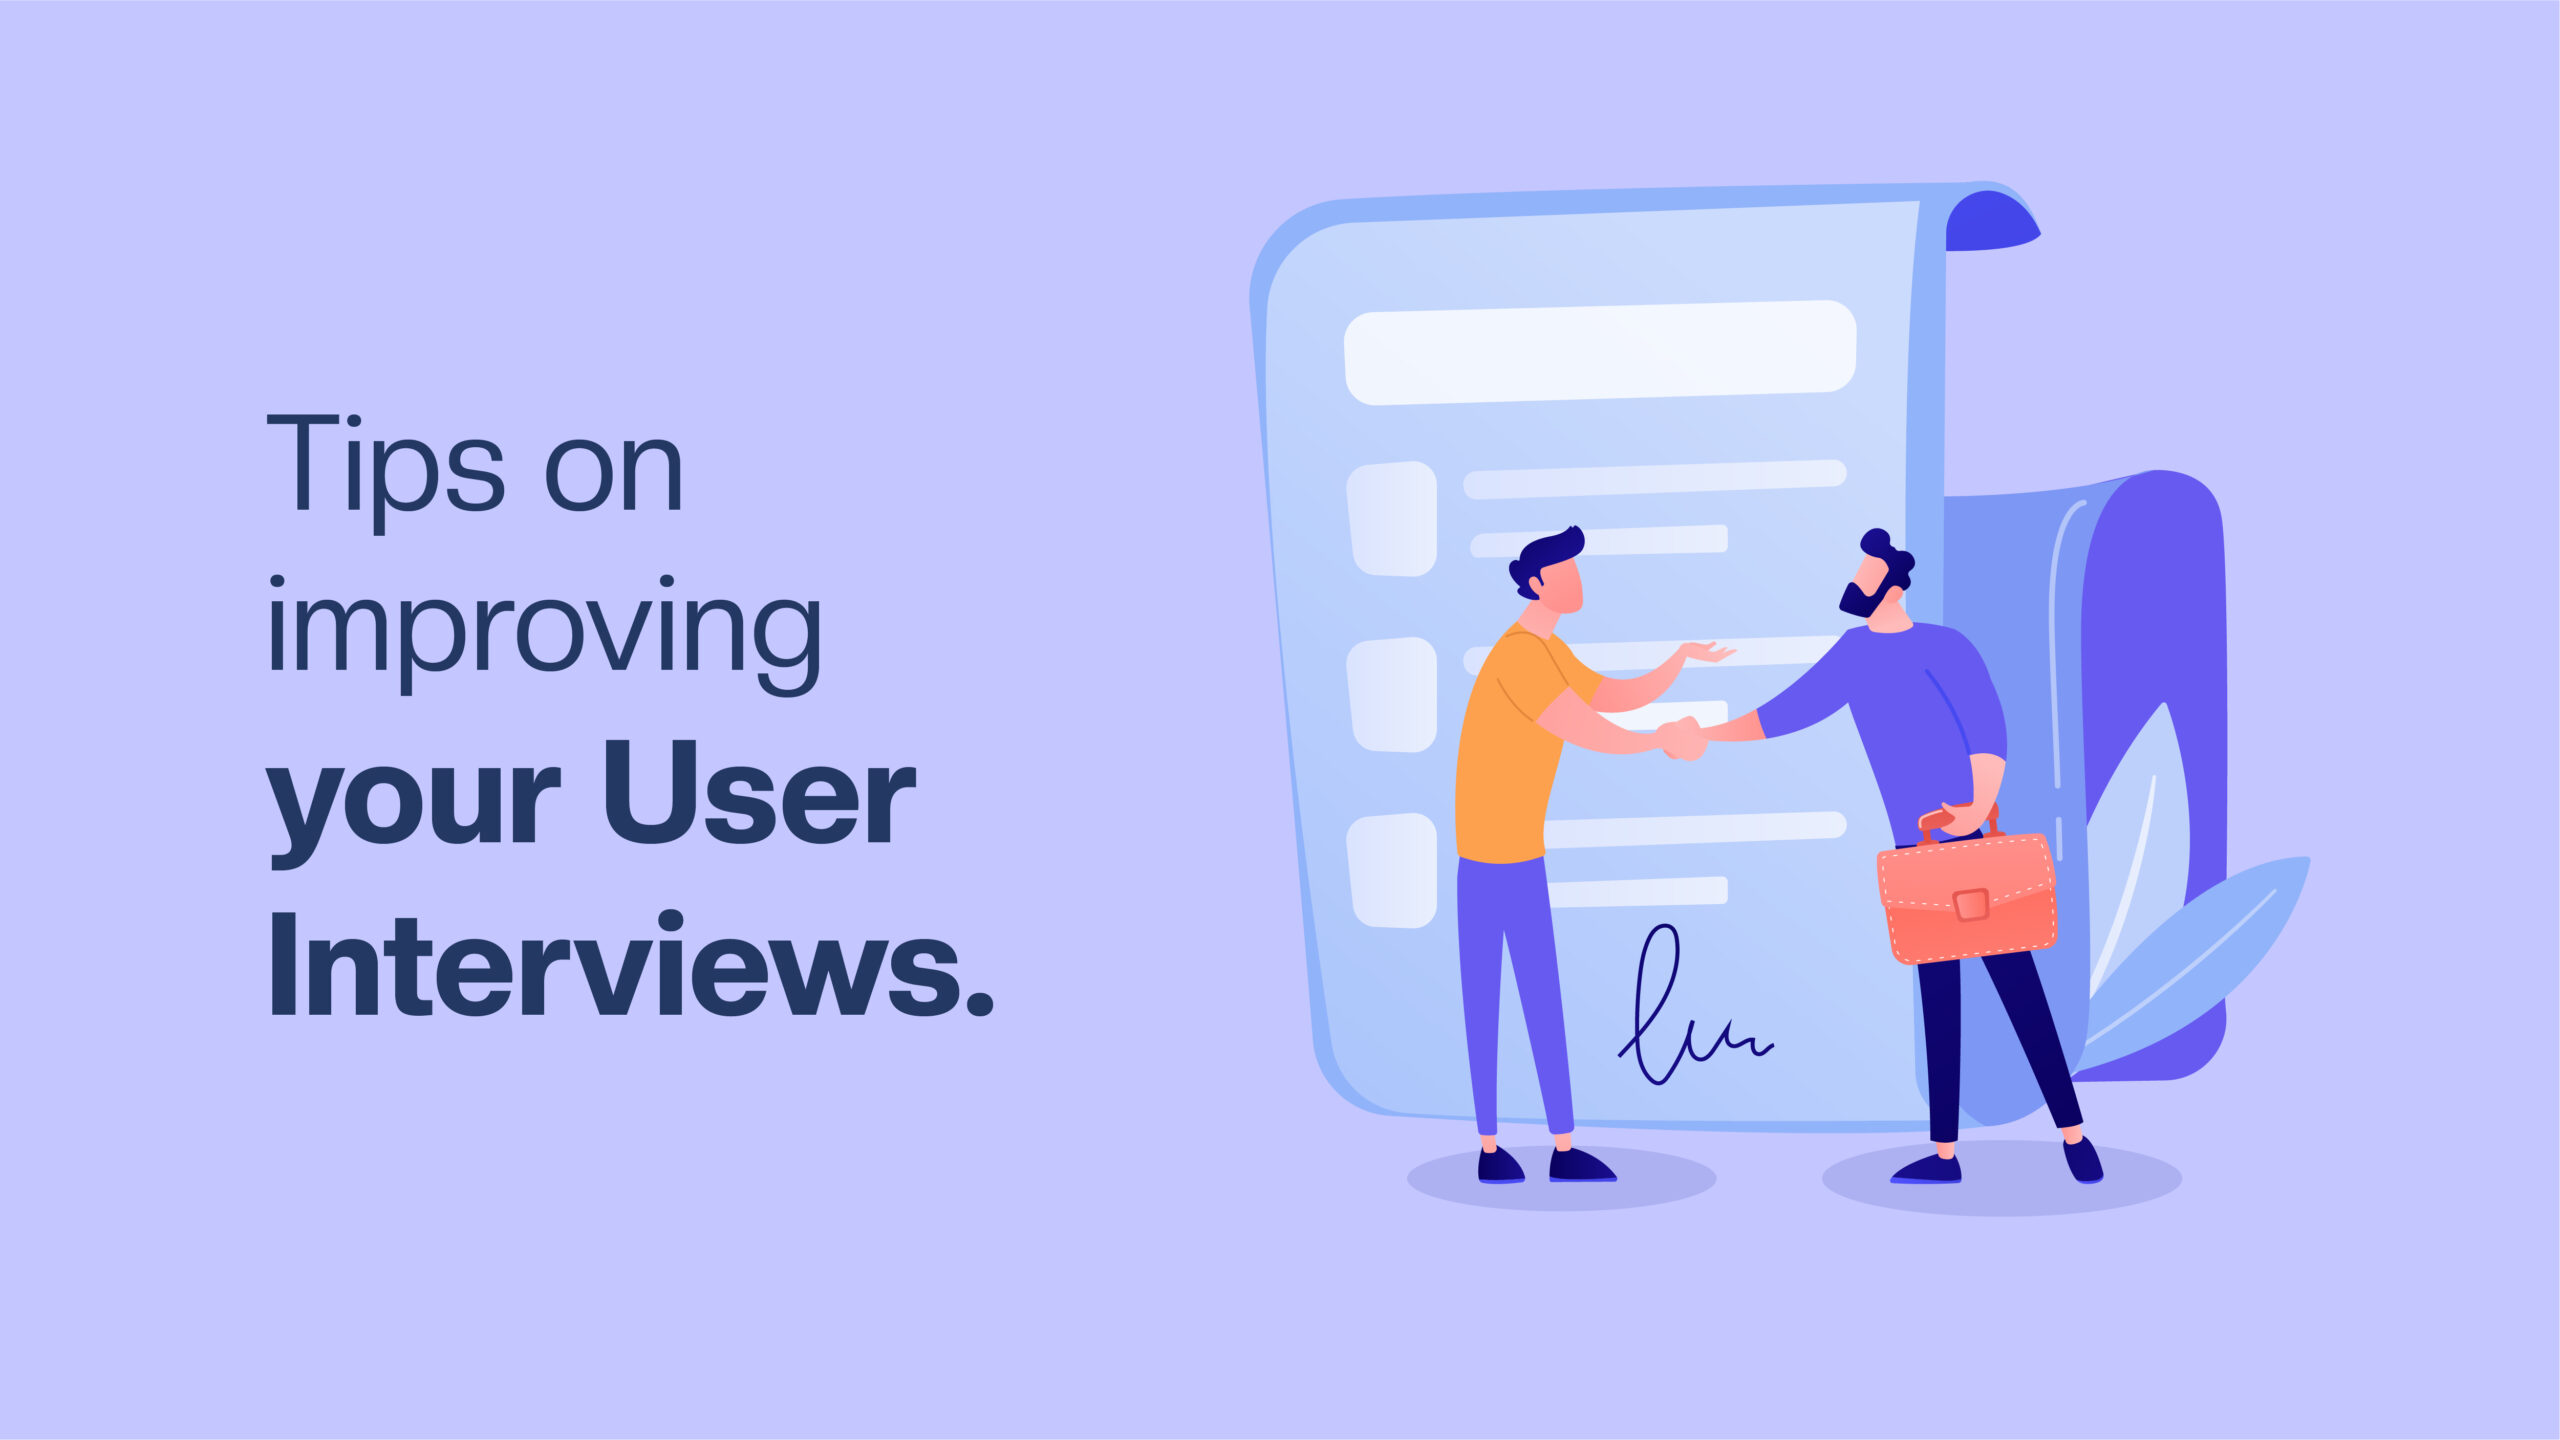 Tips on improving user interviews